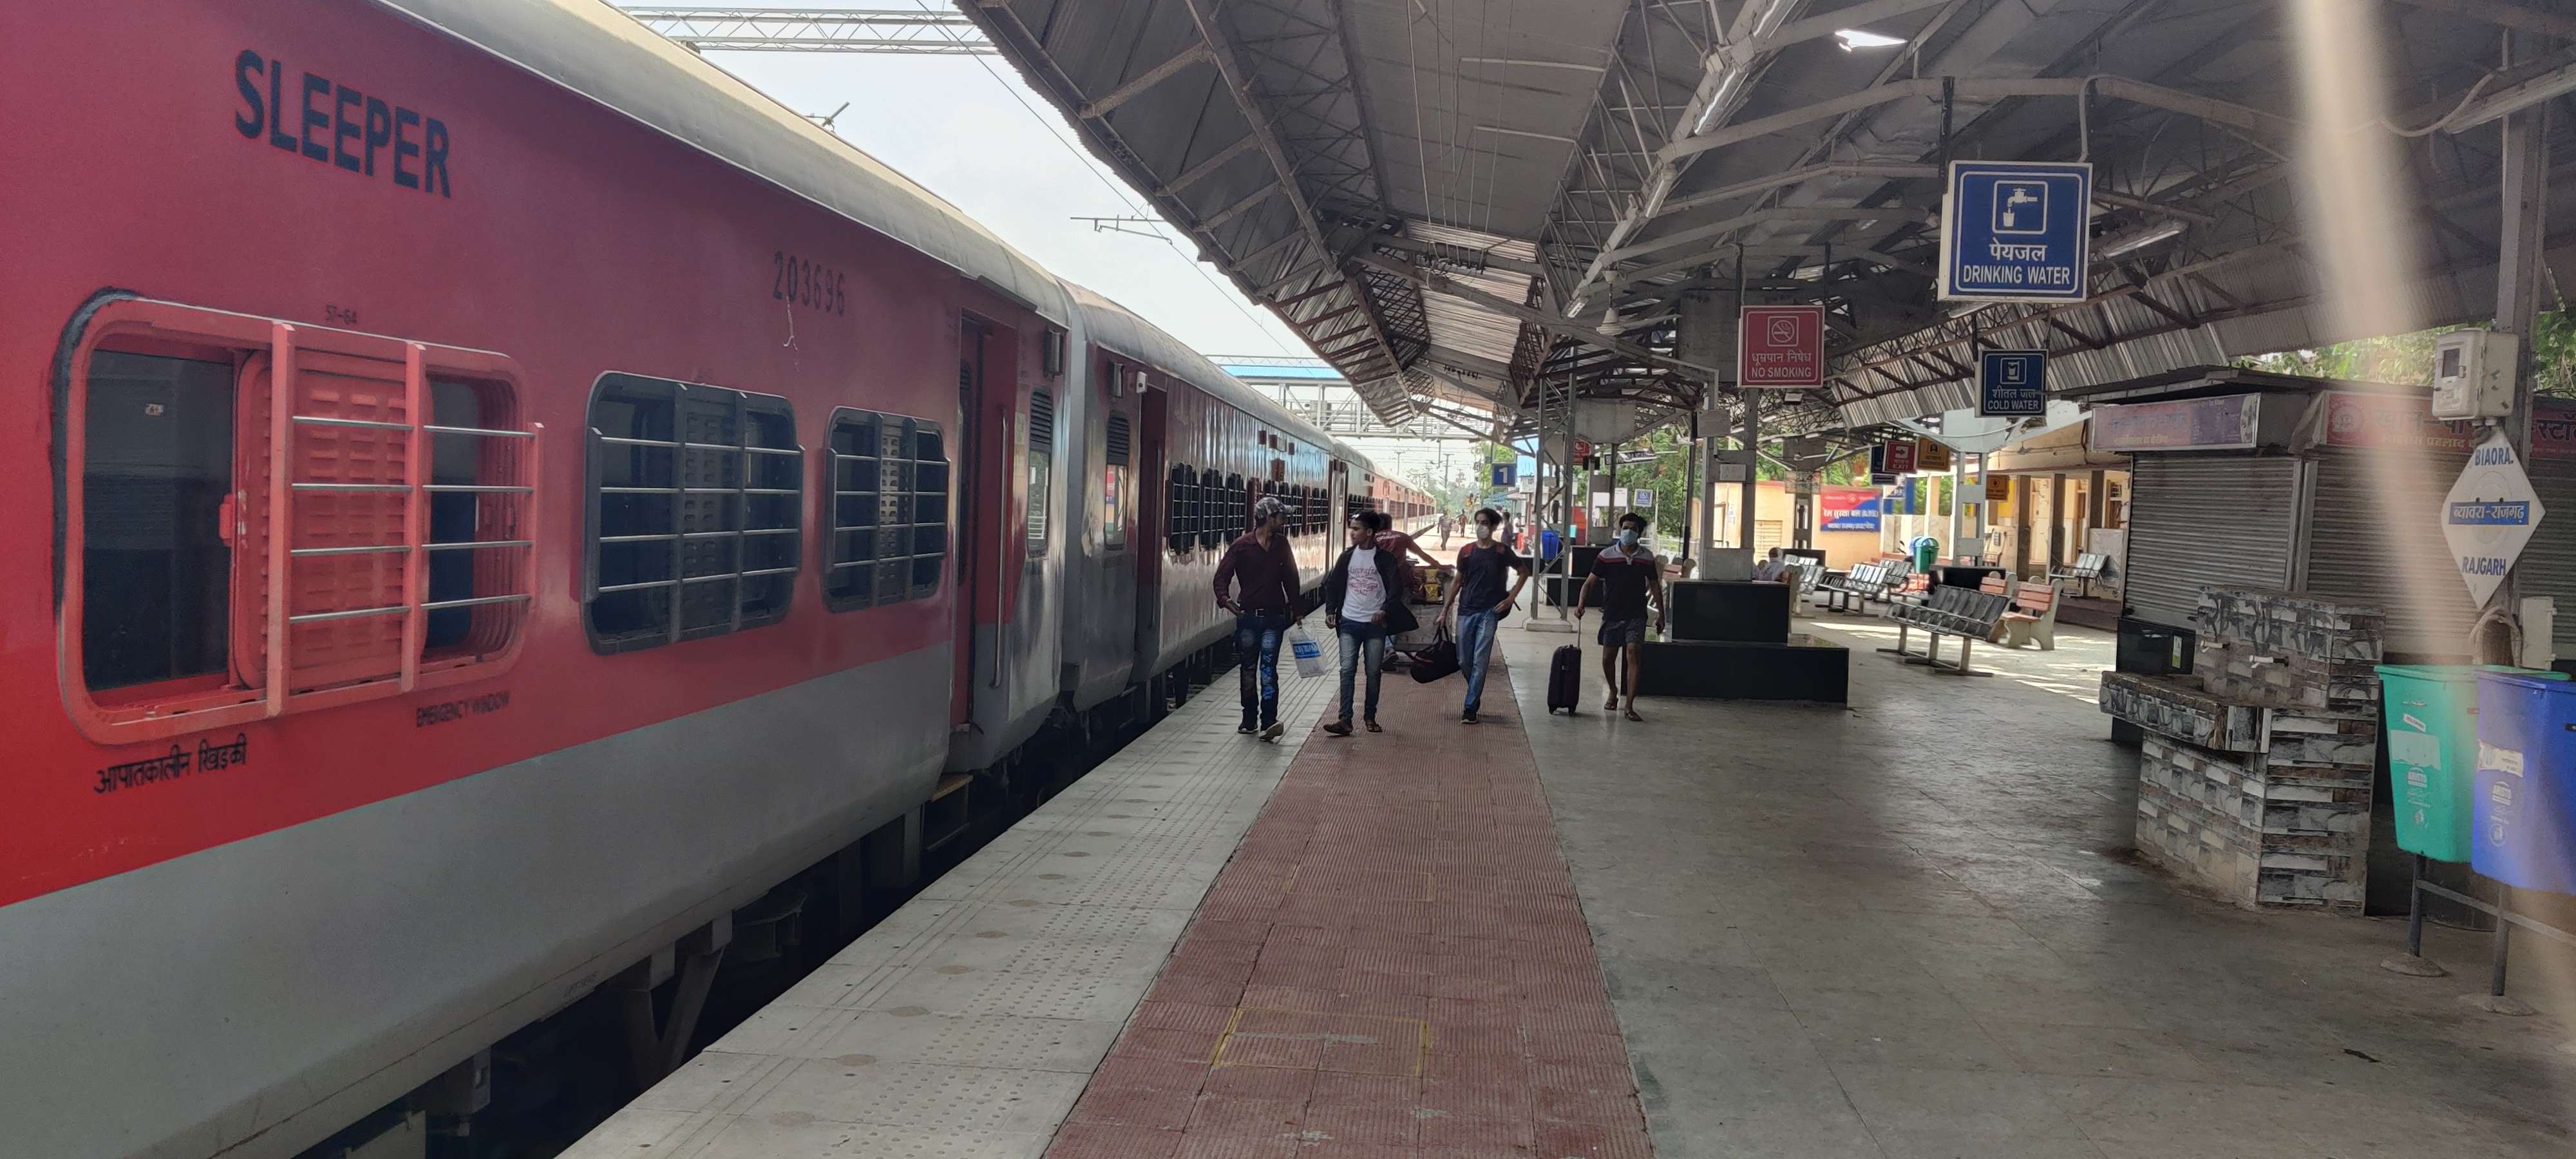 Railway news : महज छह यात्री बैठे... पहले दिन समय से पहले पहुंची चंडीगढ़ एक्सप्रेस, आधे घंटे खड़ी रही